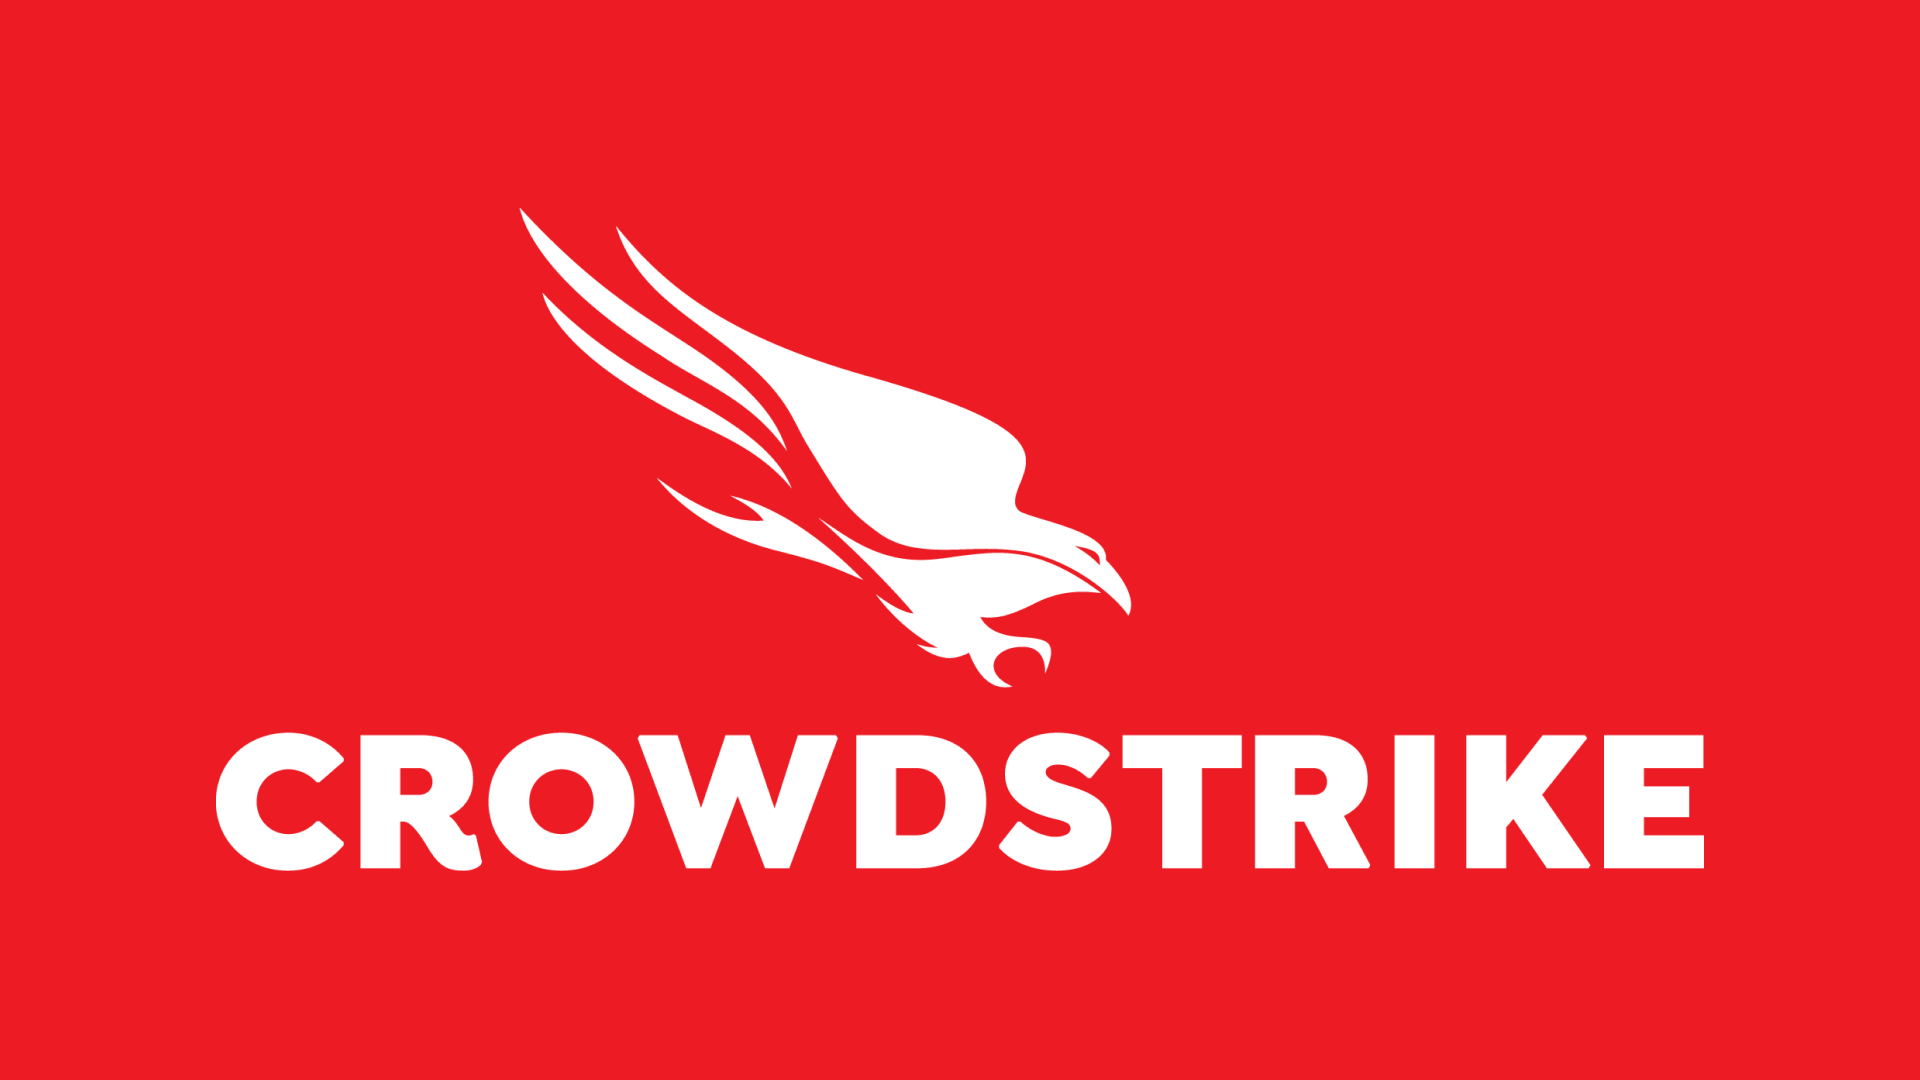 CrowdStrike's logo